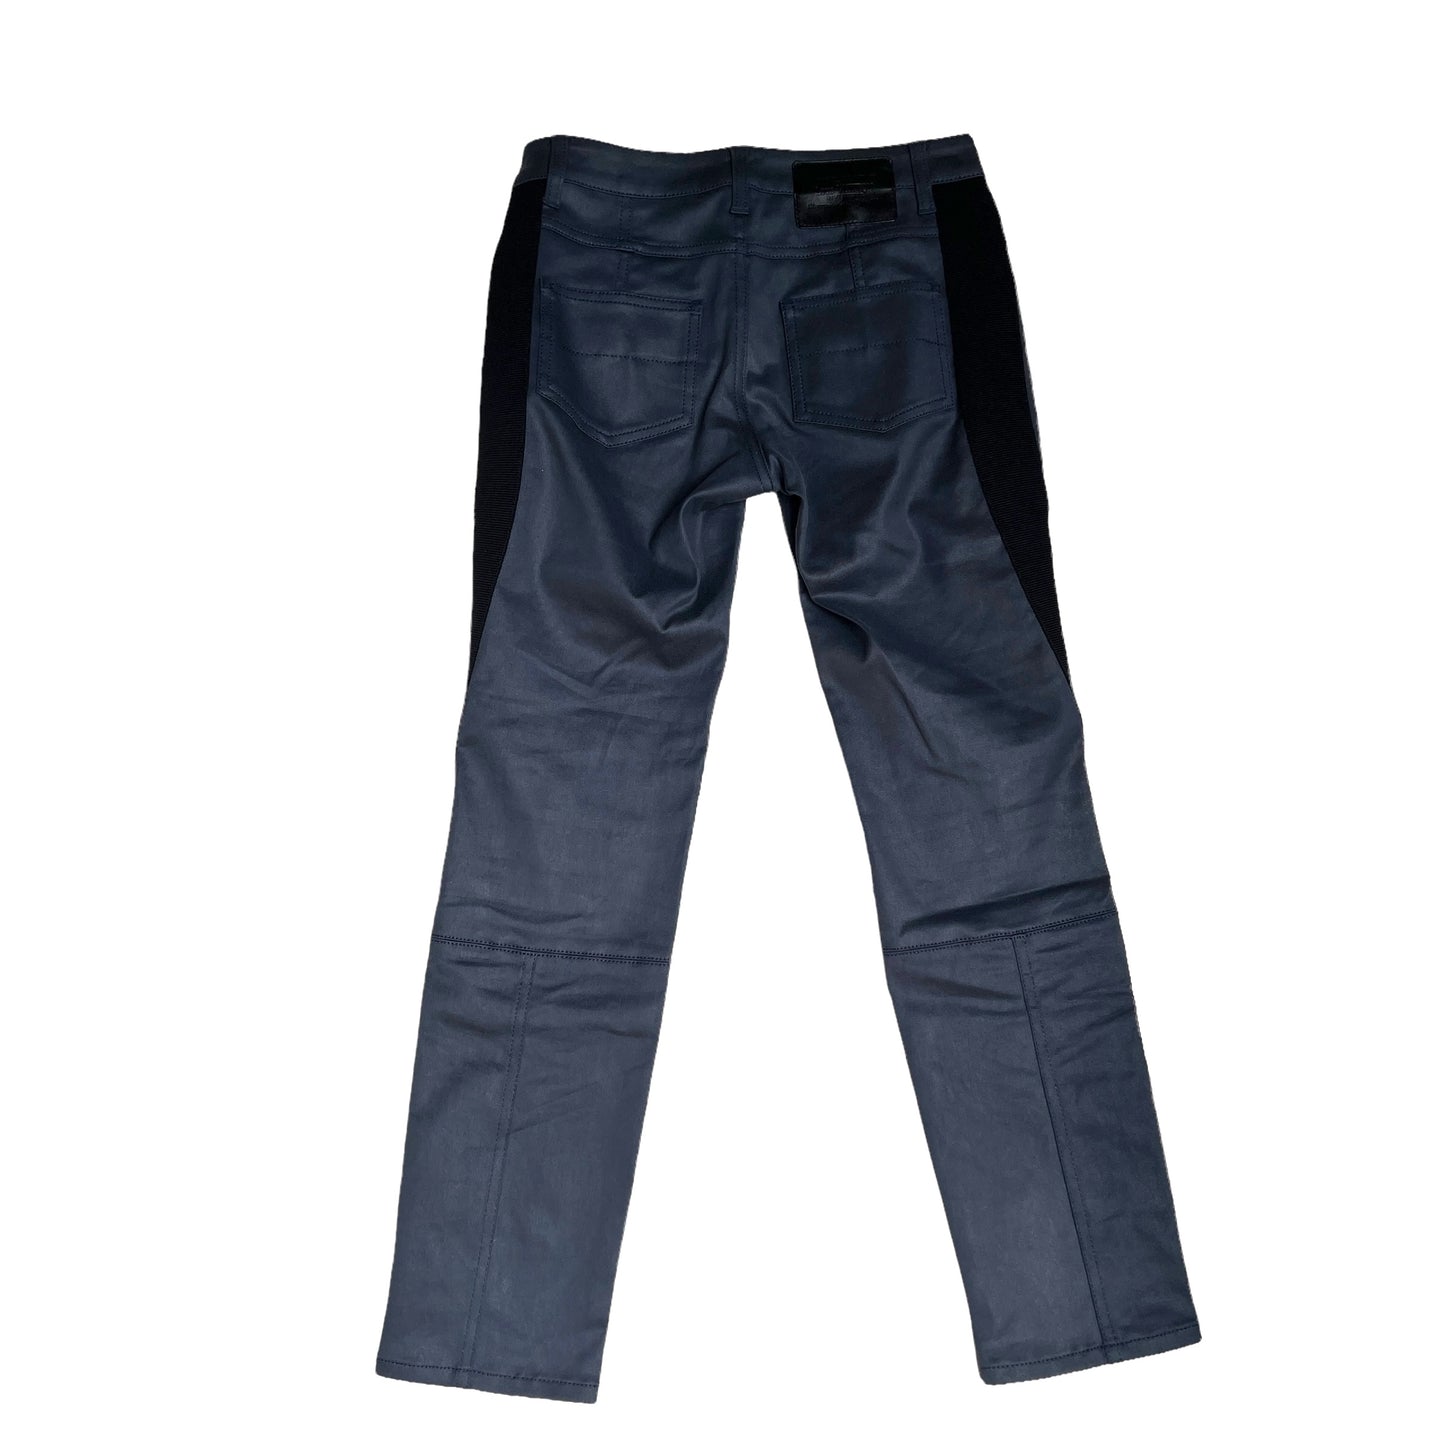 Blue Jeans with Black Details - S